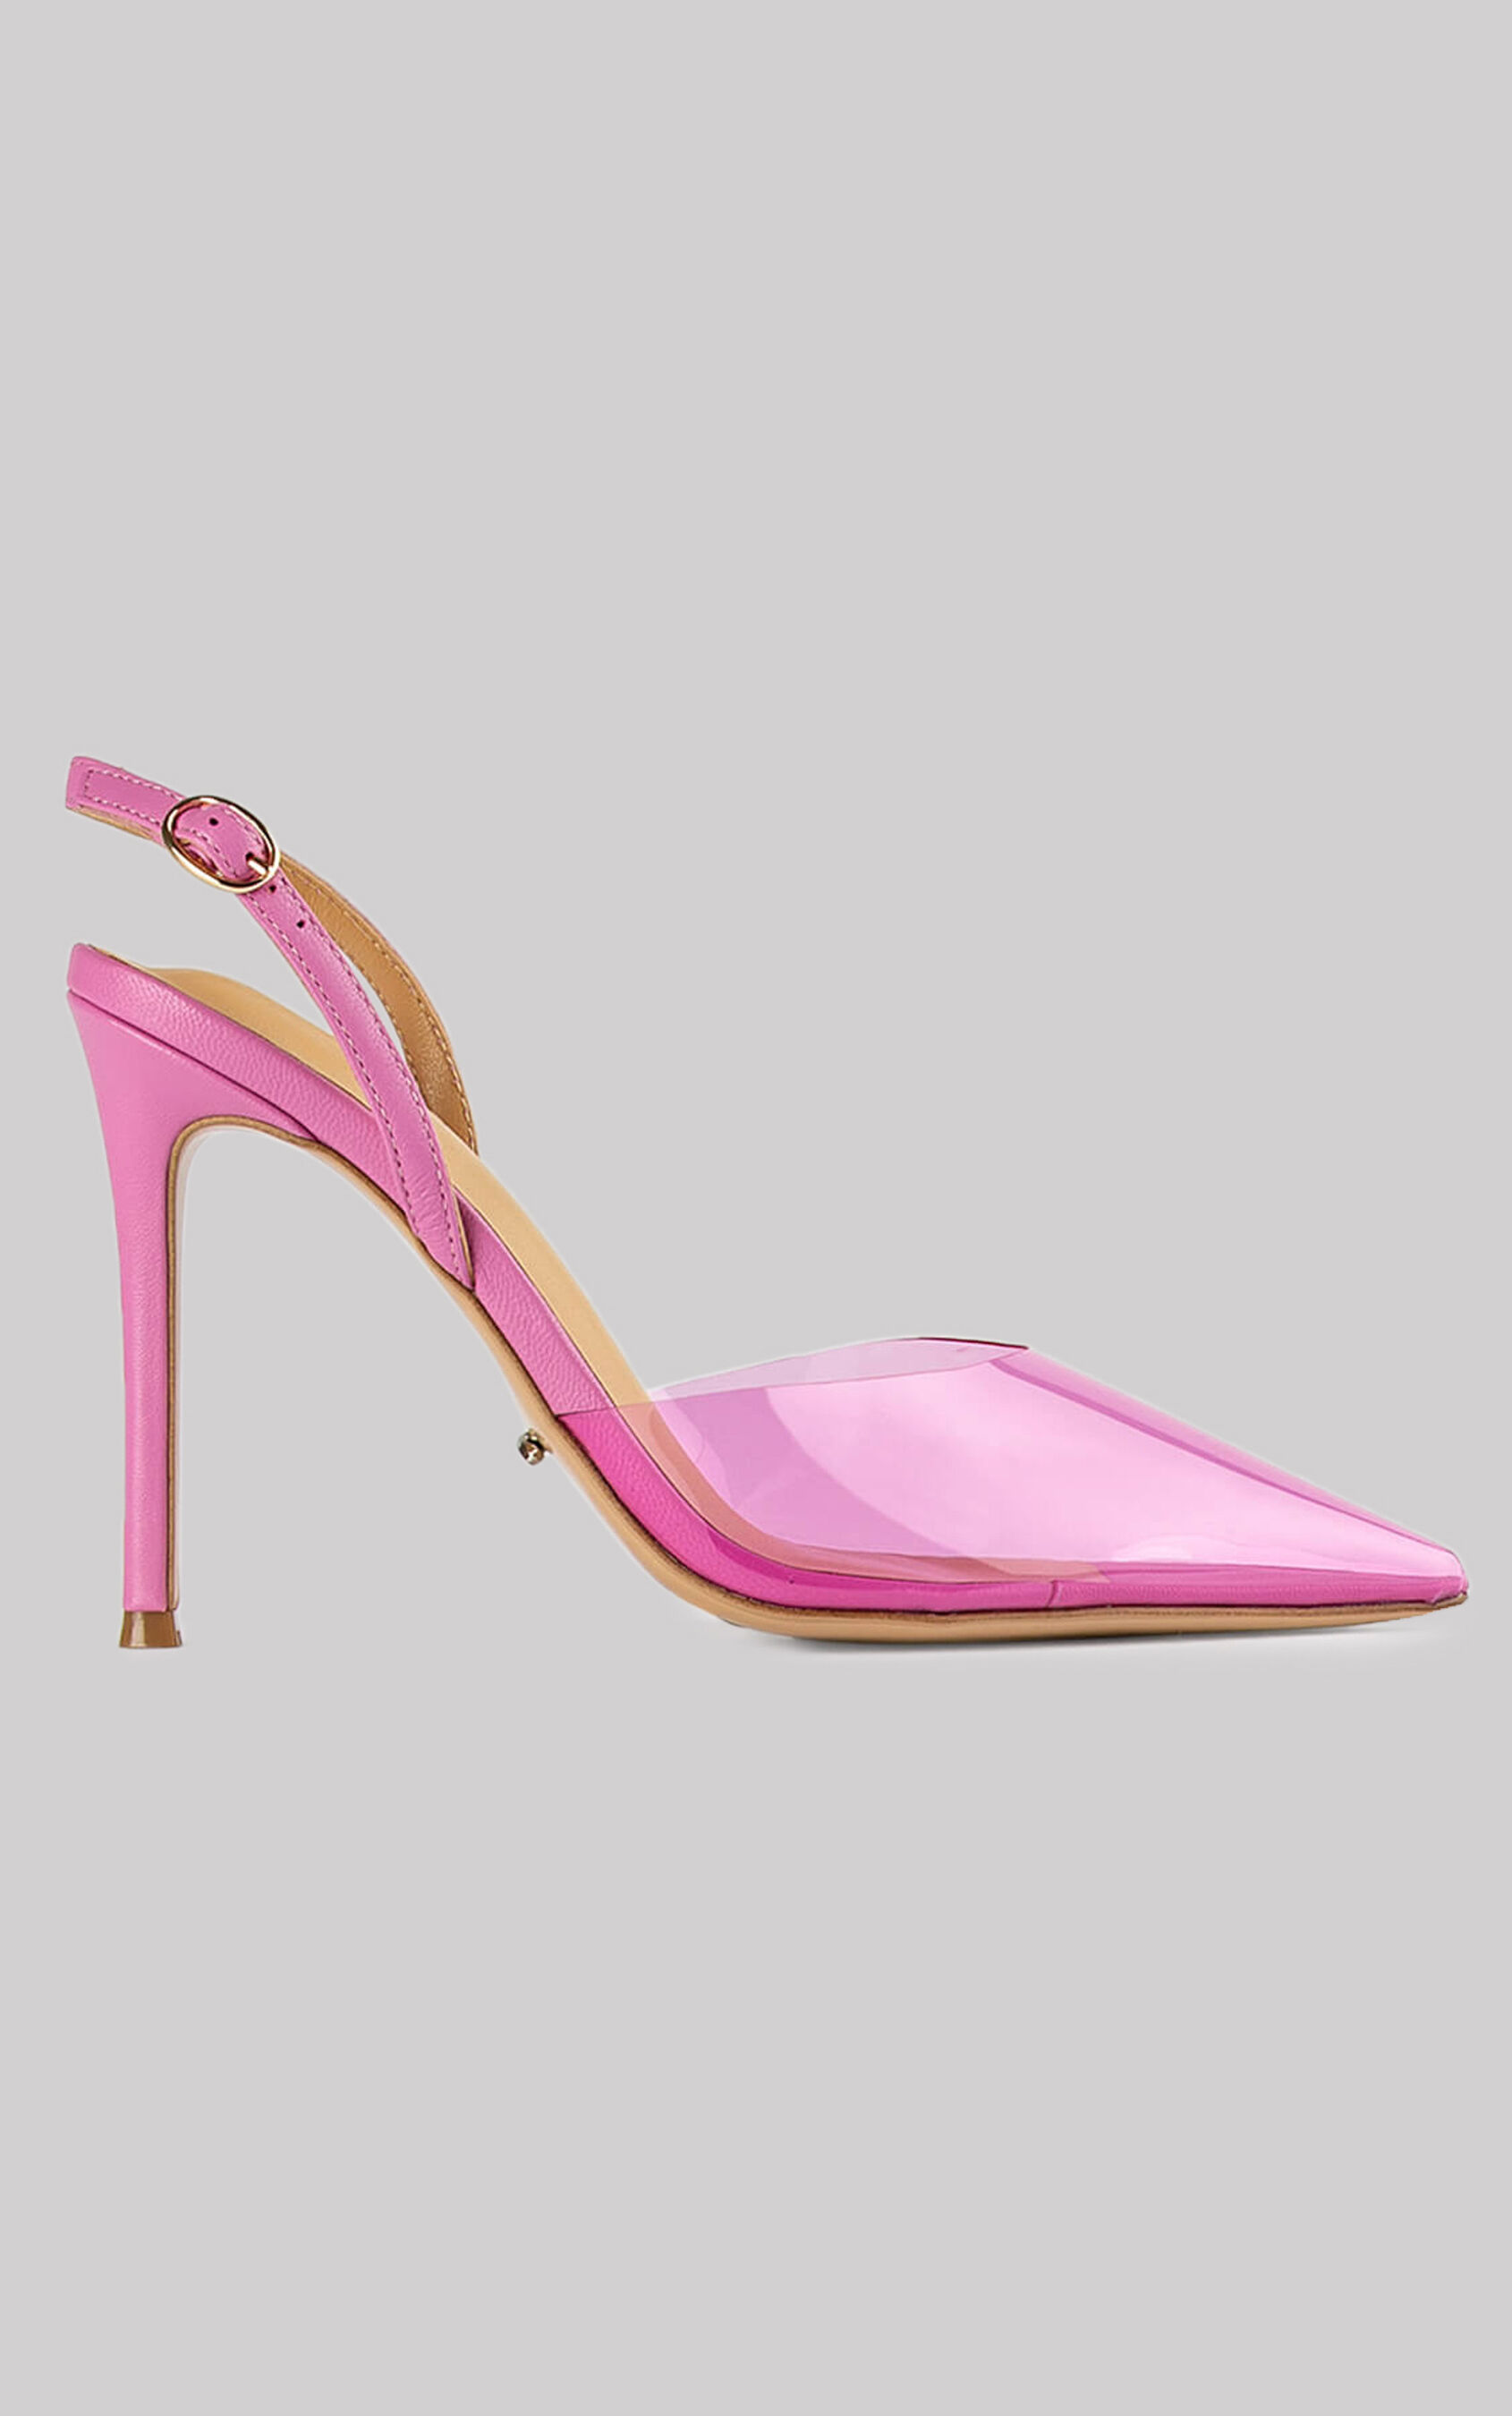 tony-bianco-lazer-heels-in-pink-vinylite-pink-nappa